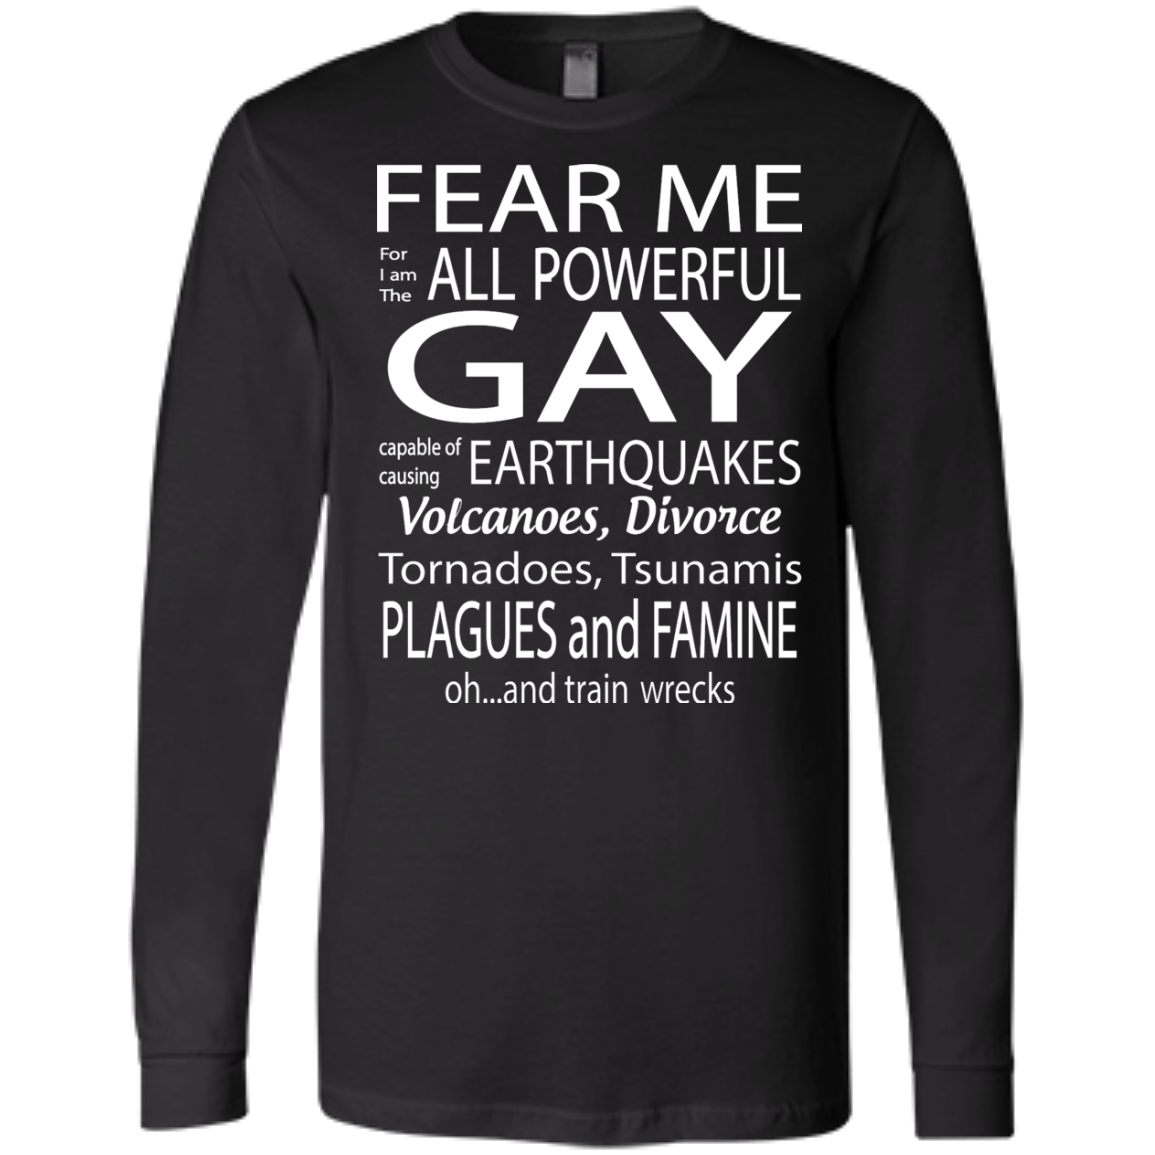 Powerfull gay Gay pride black round neck tshirt for men | full sleeves tshirt | round neck tshirt for men